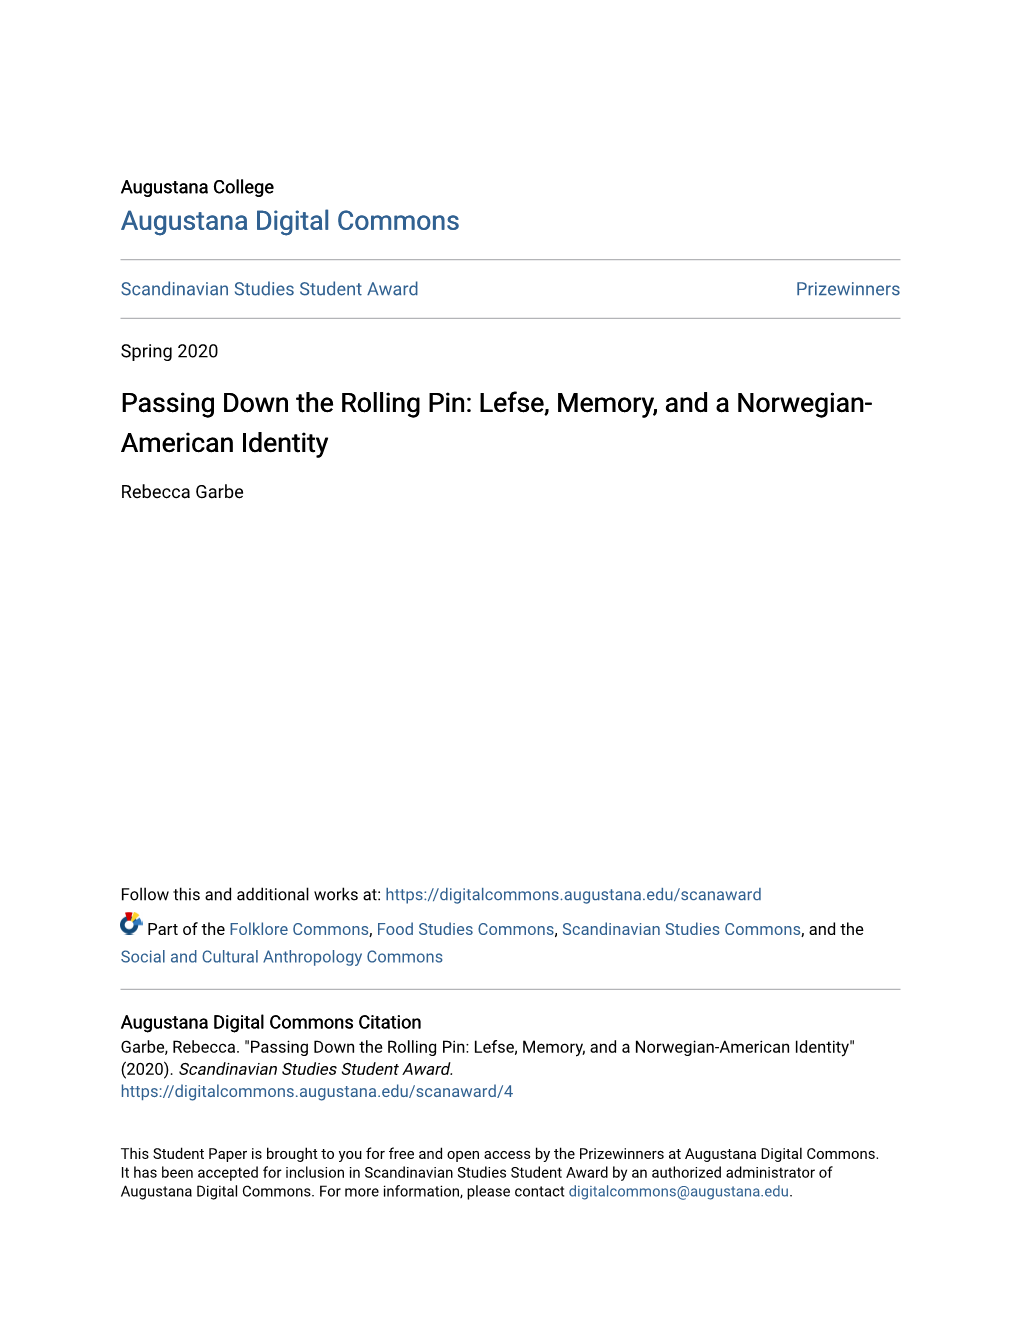 Lefse, Memory, and a Norwegian-American Identity" (2020)